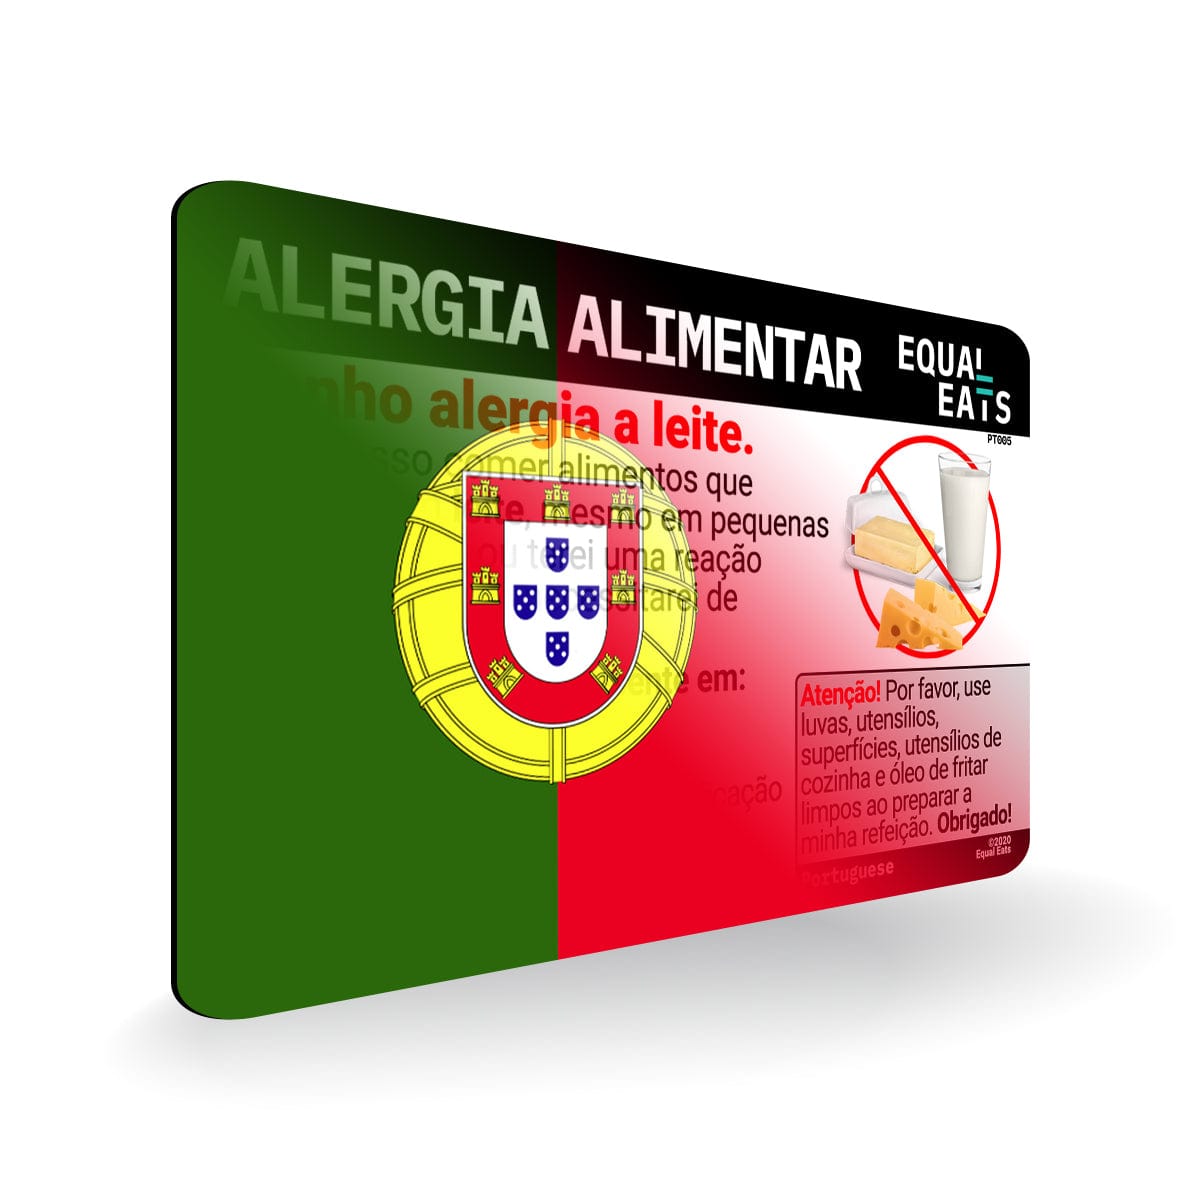 Milk Allergy in Portuguese. Milk Allergy Card for Portugal